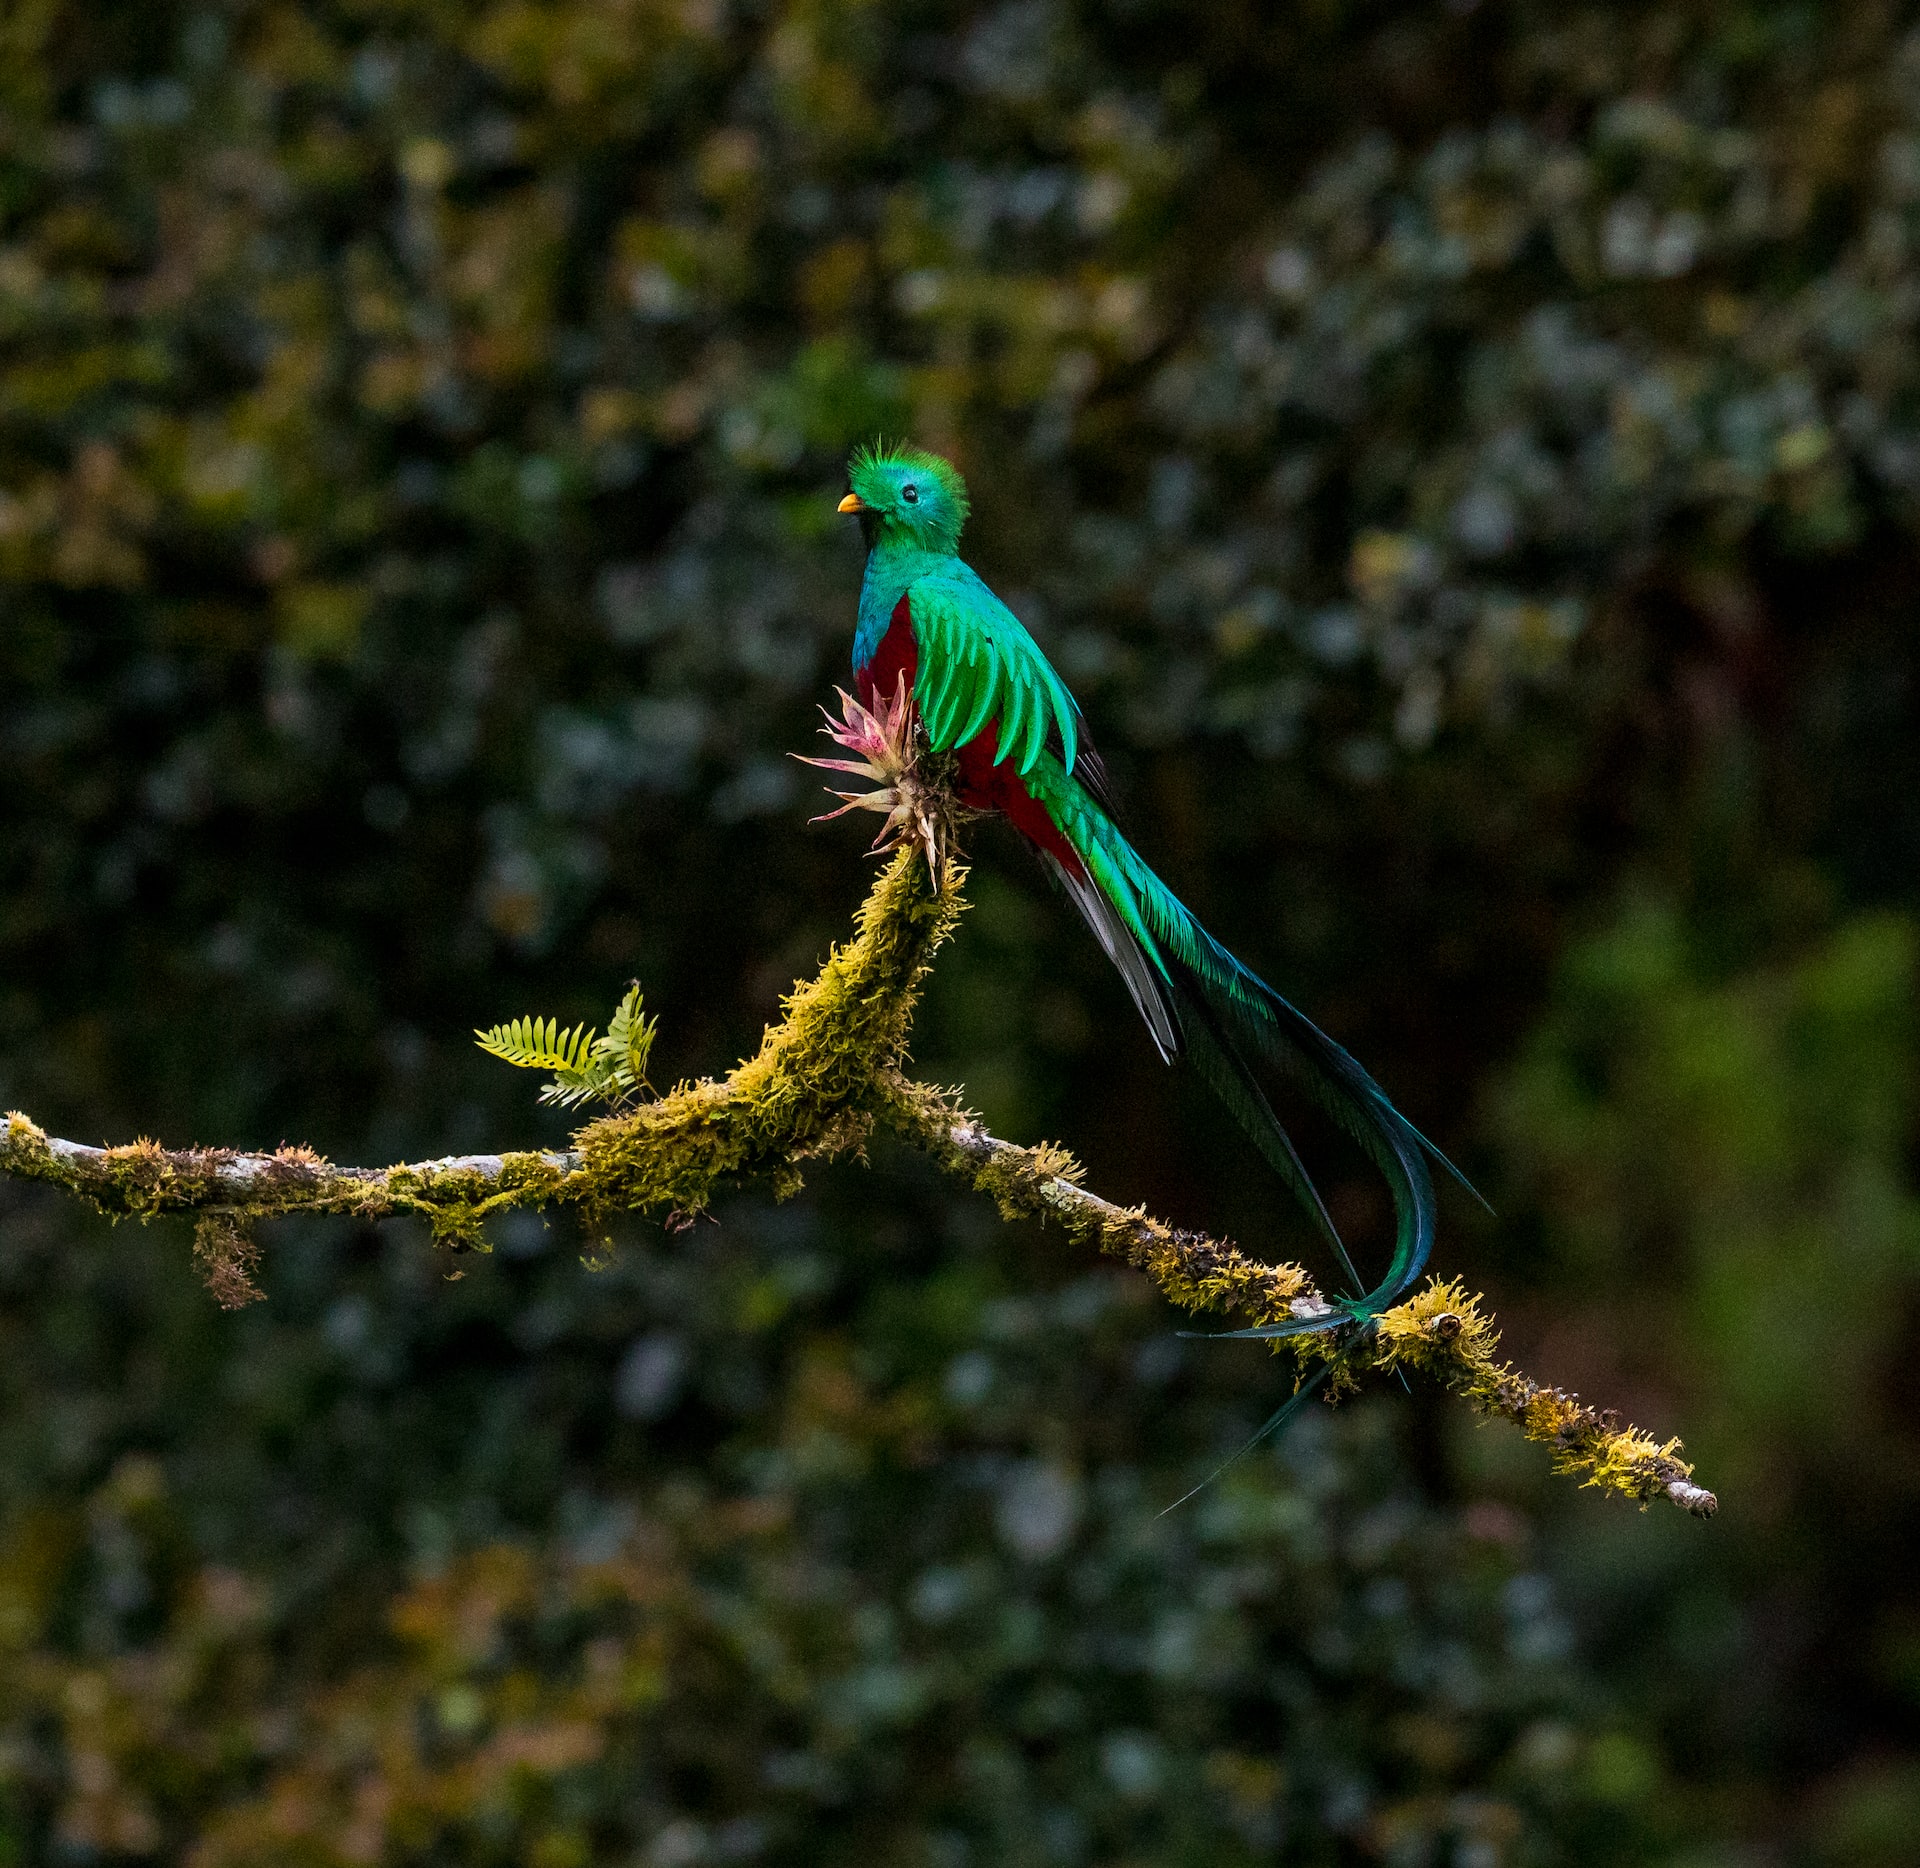 monteverde or la fortuna for birdwatching